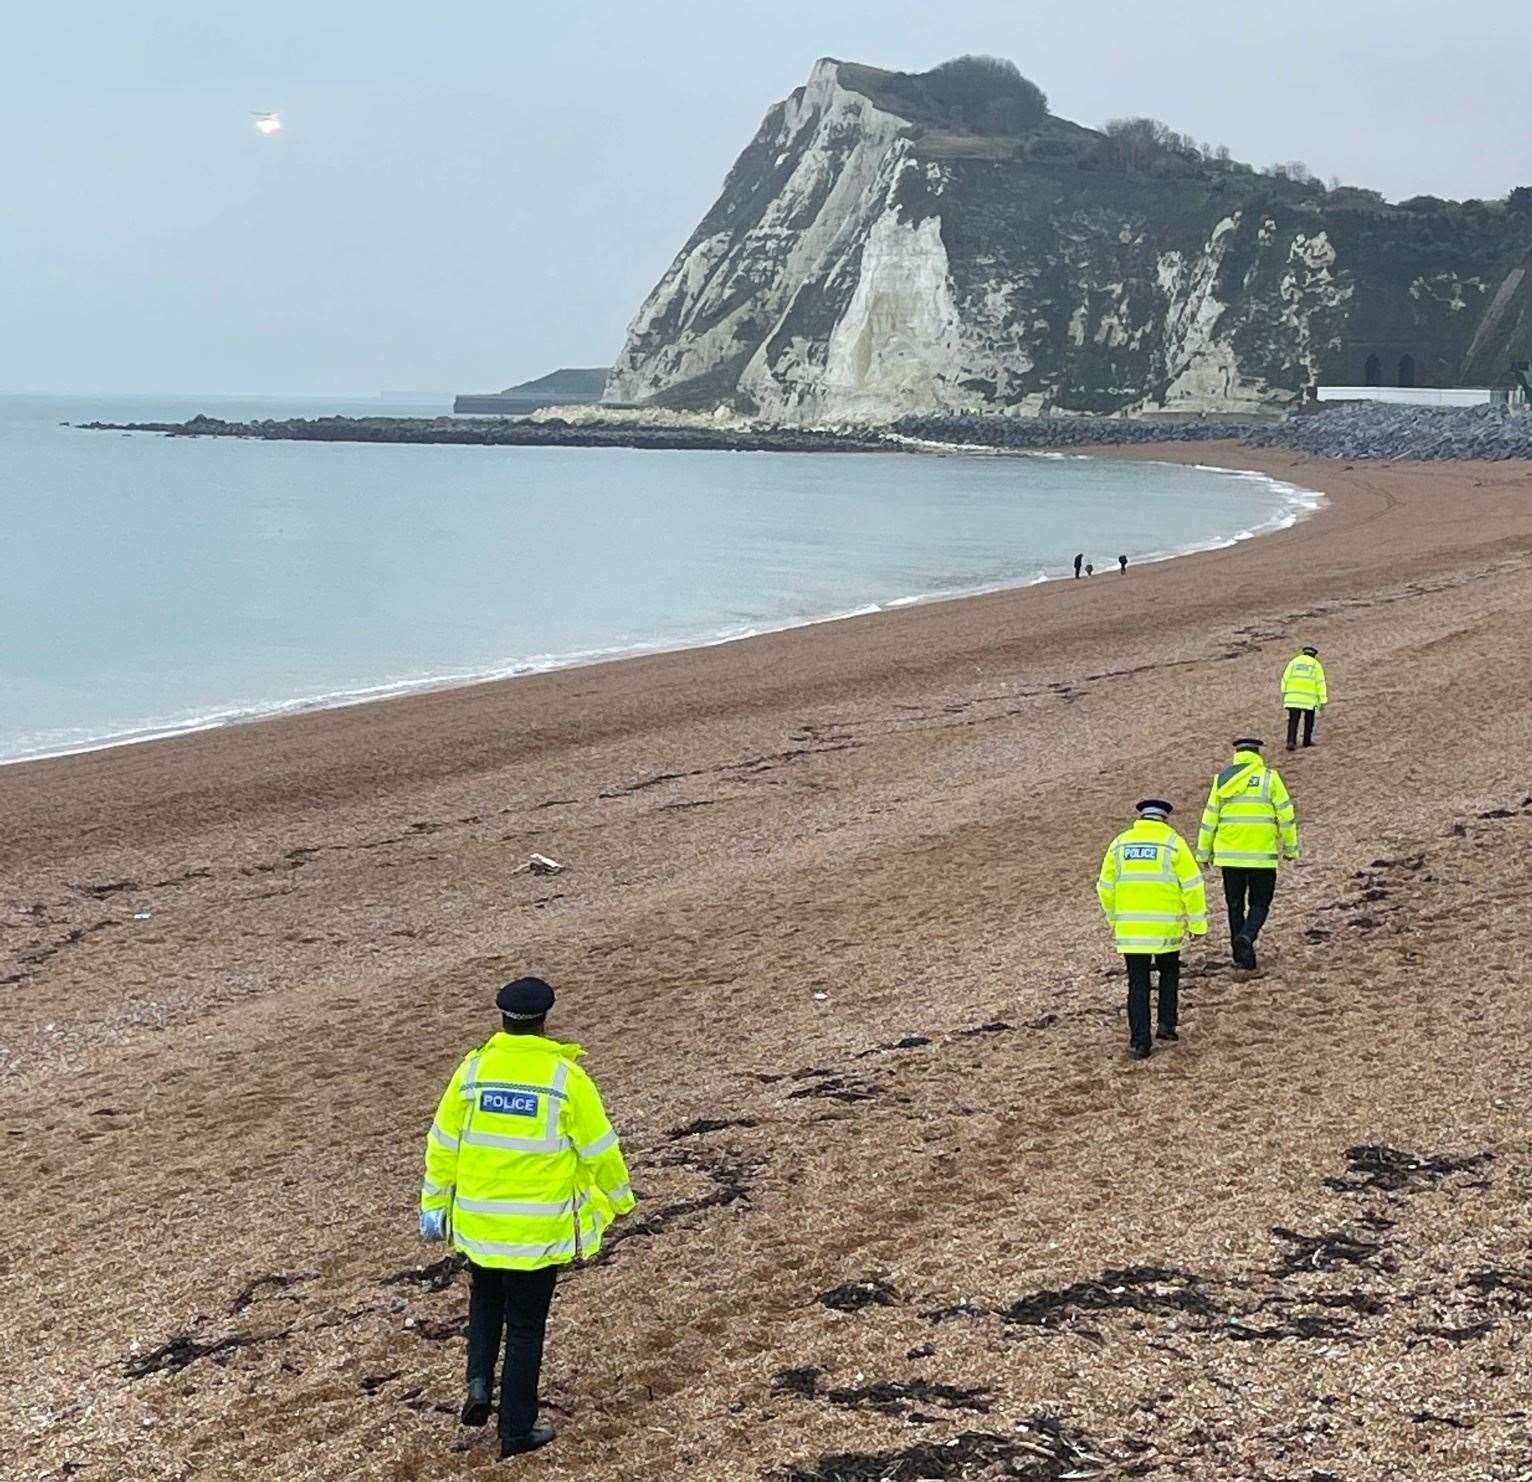 Police searching Shakespeare Beach yesterday. Photo: LKJ(c)